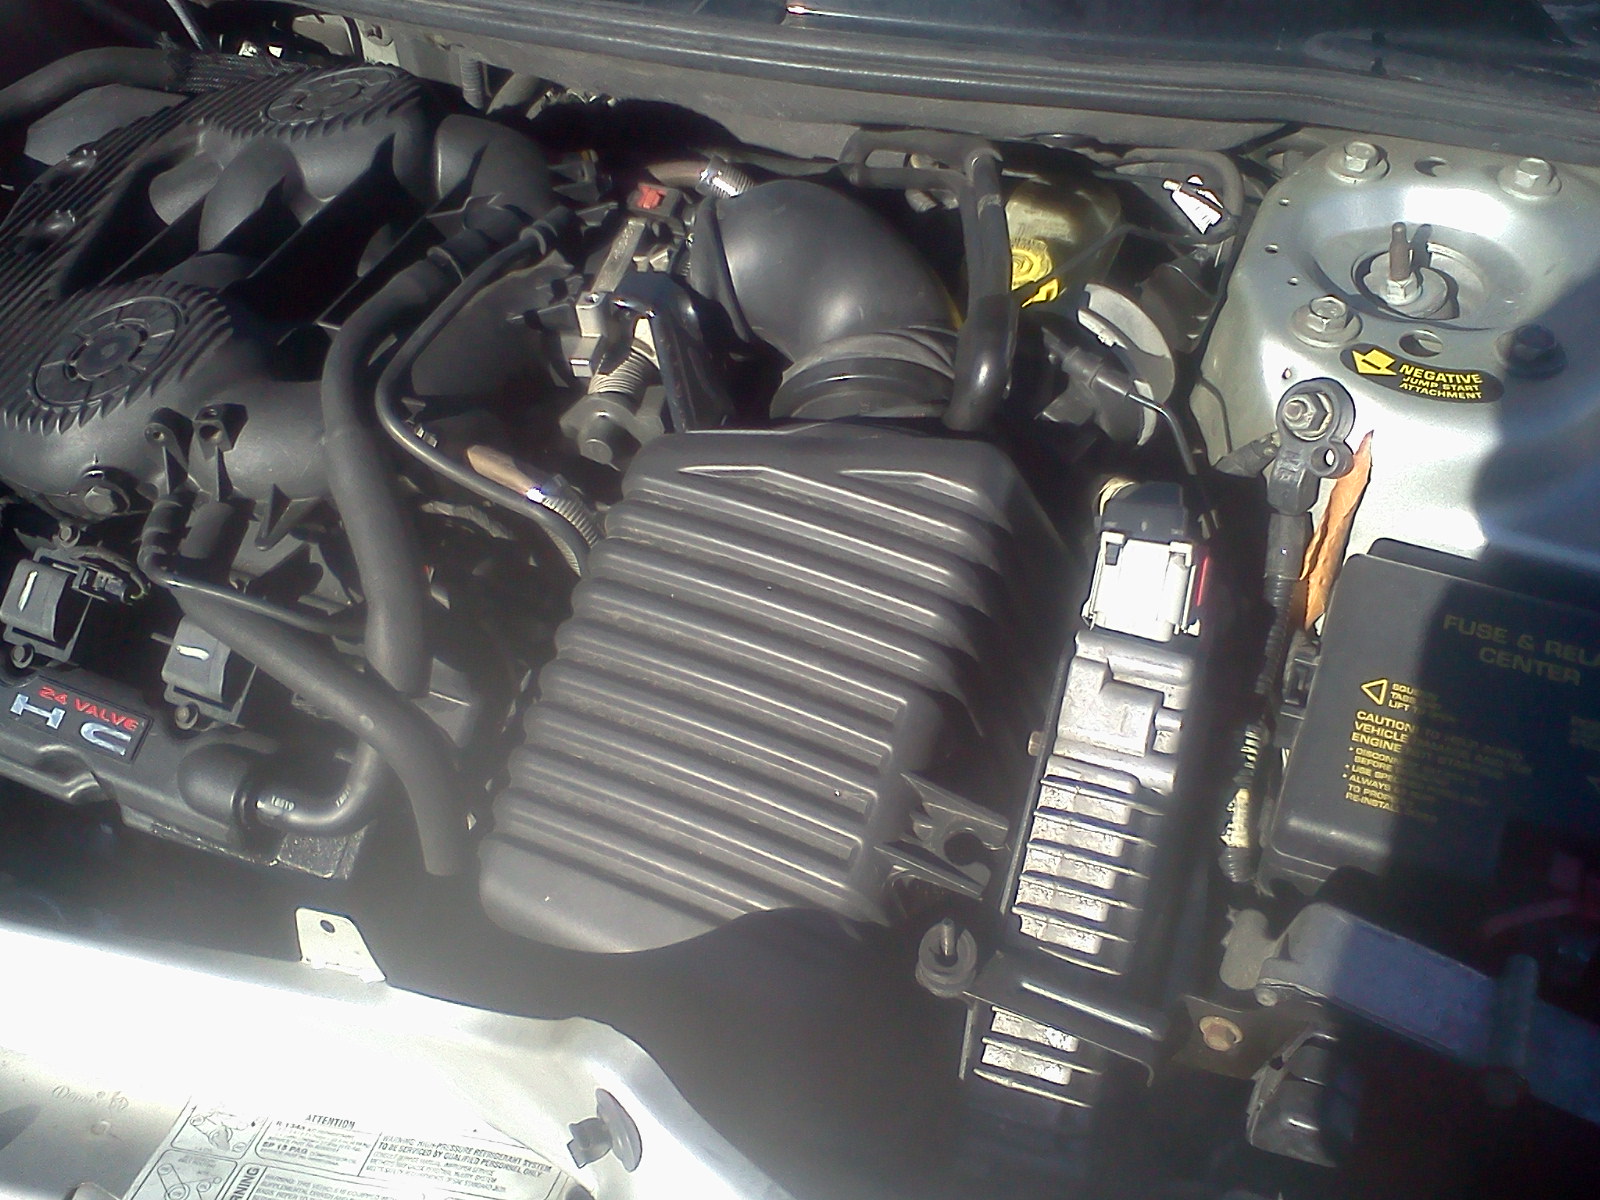 2001 Chrysler sebring convertible engine problems #2